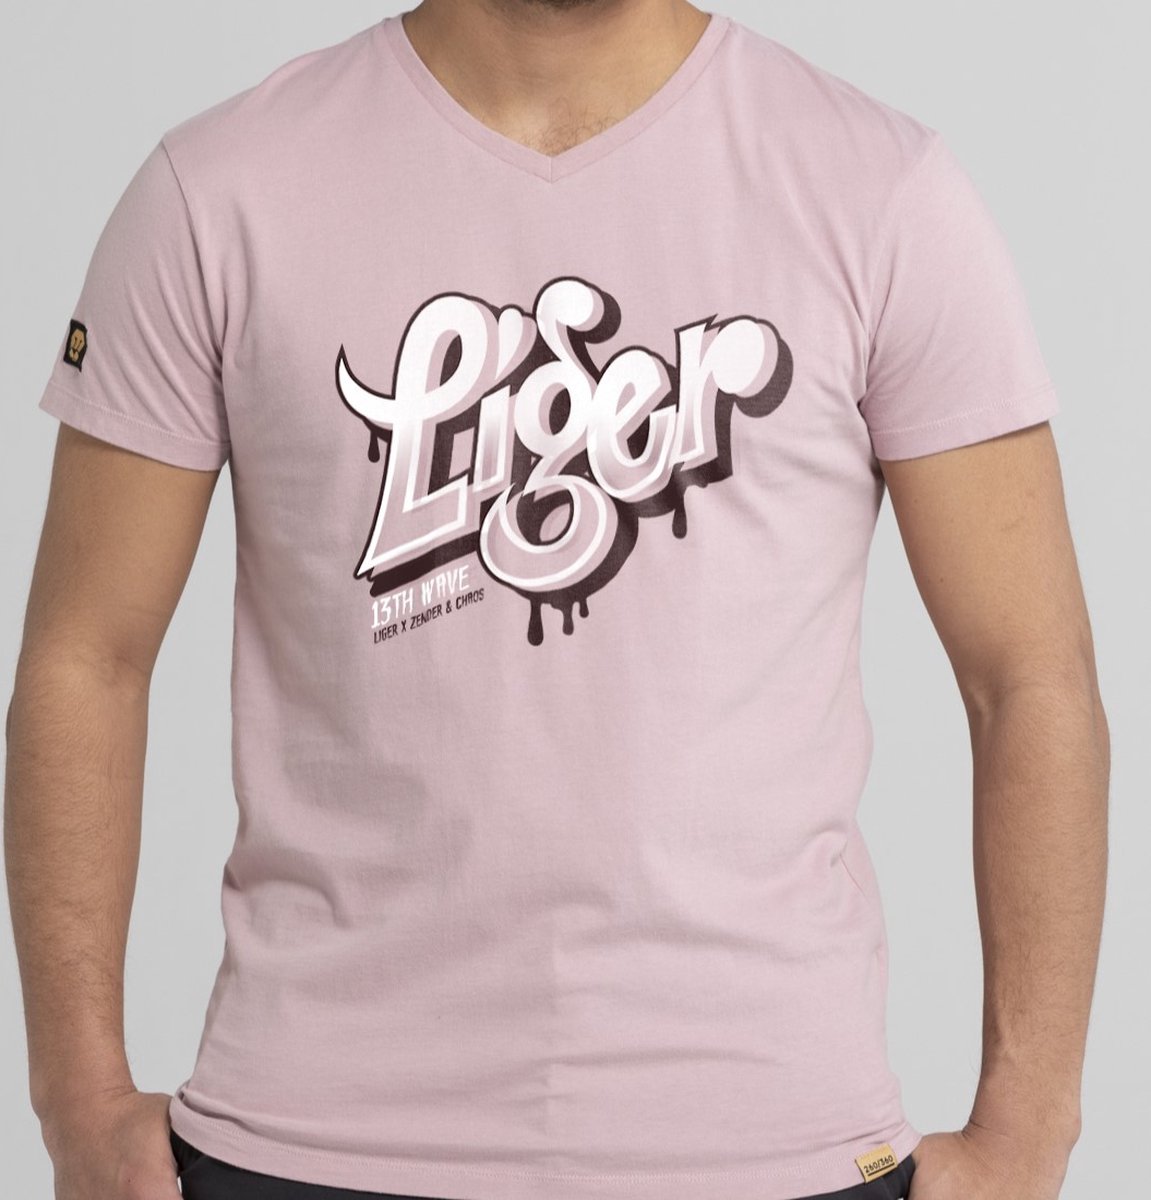 LIGER - Limited Edition van 360 stuks - Zender & Chaos - LIGER typografie - T-Shirt - Maat M